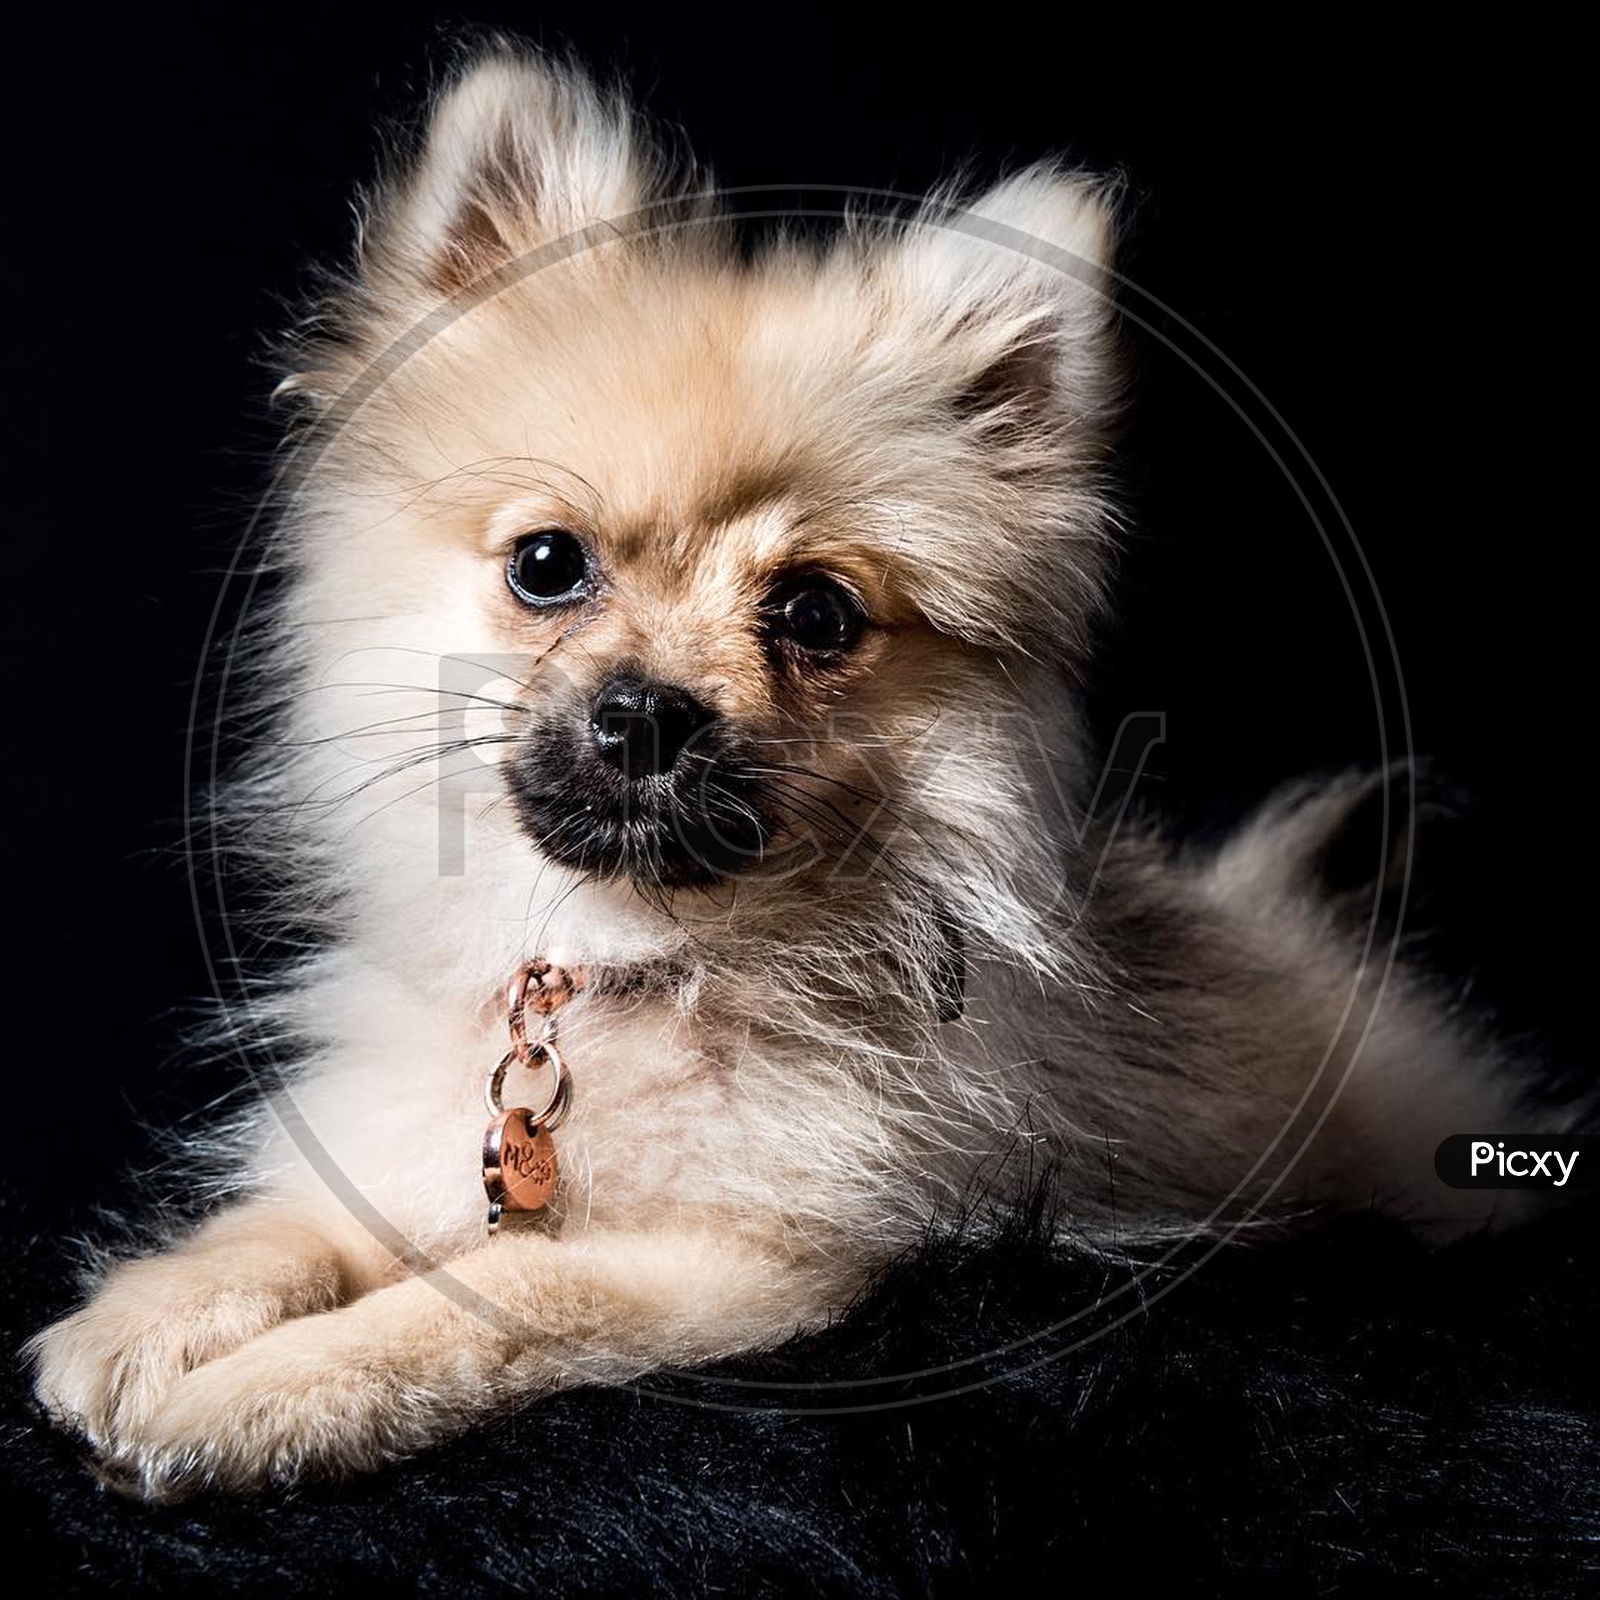 Portrait of a Pomeranian dog